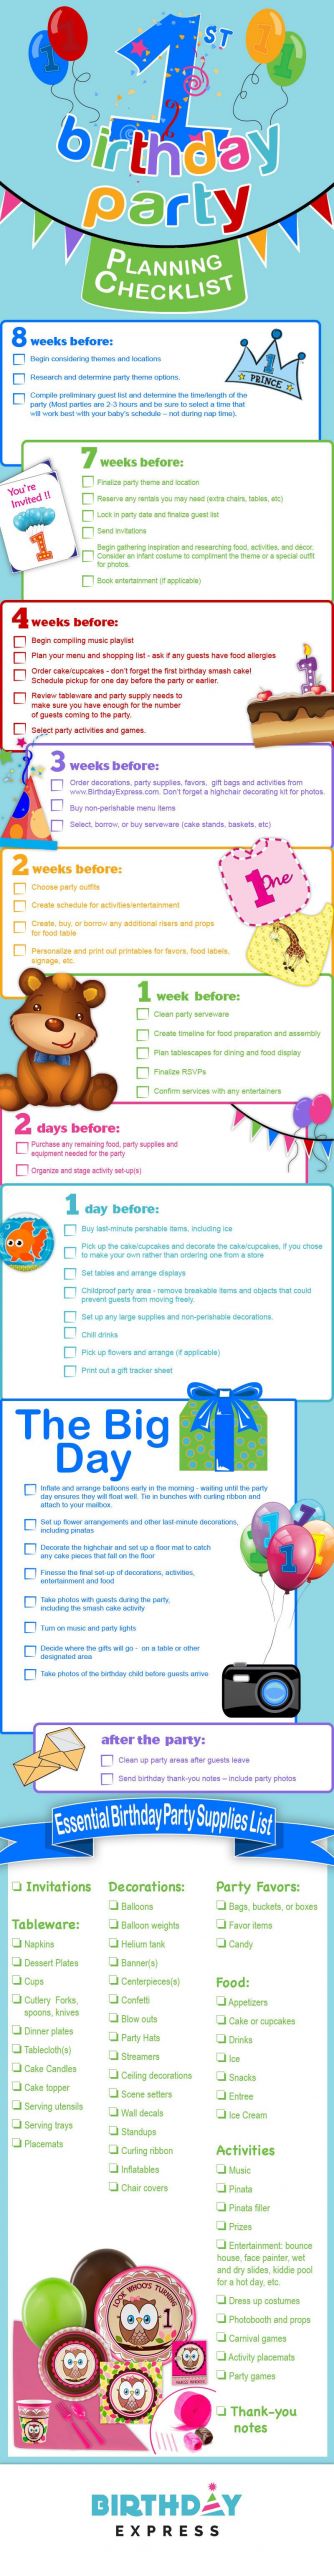 First Birthday Party Checklist
 1st Birthday Party Checklist